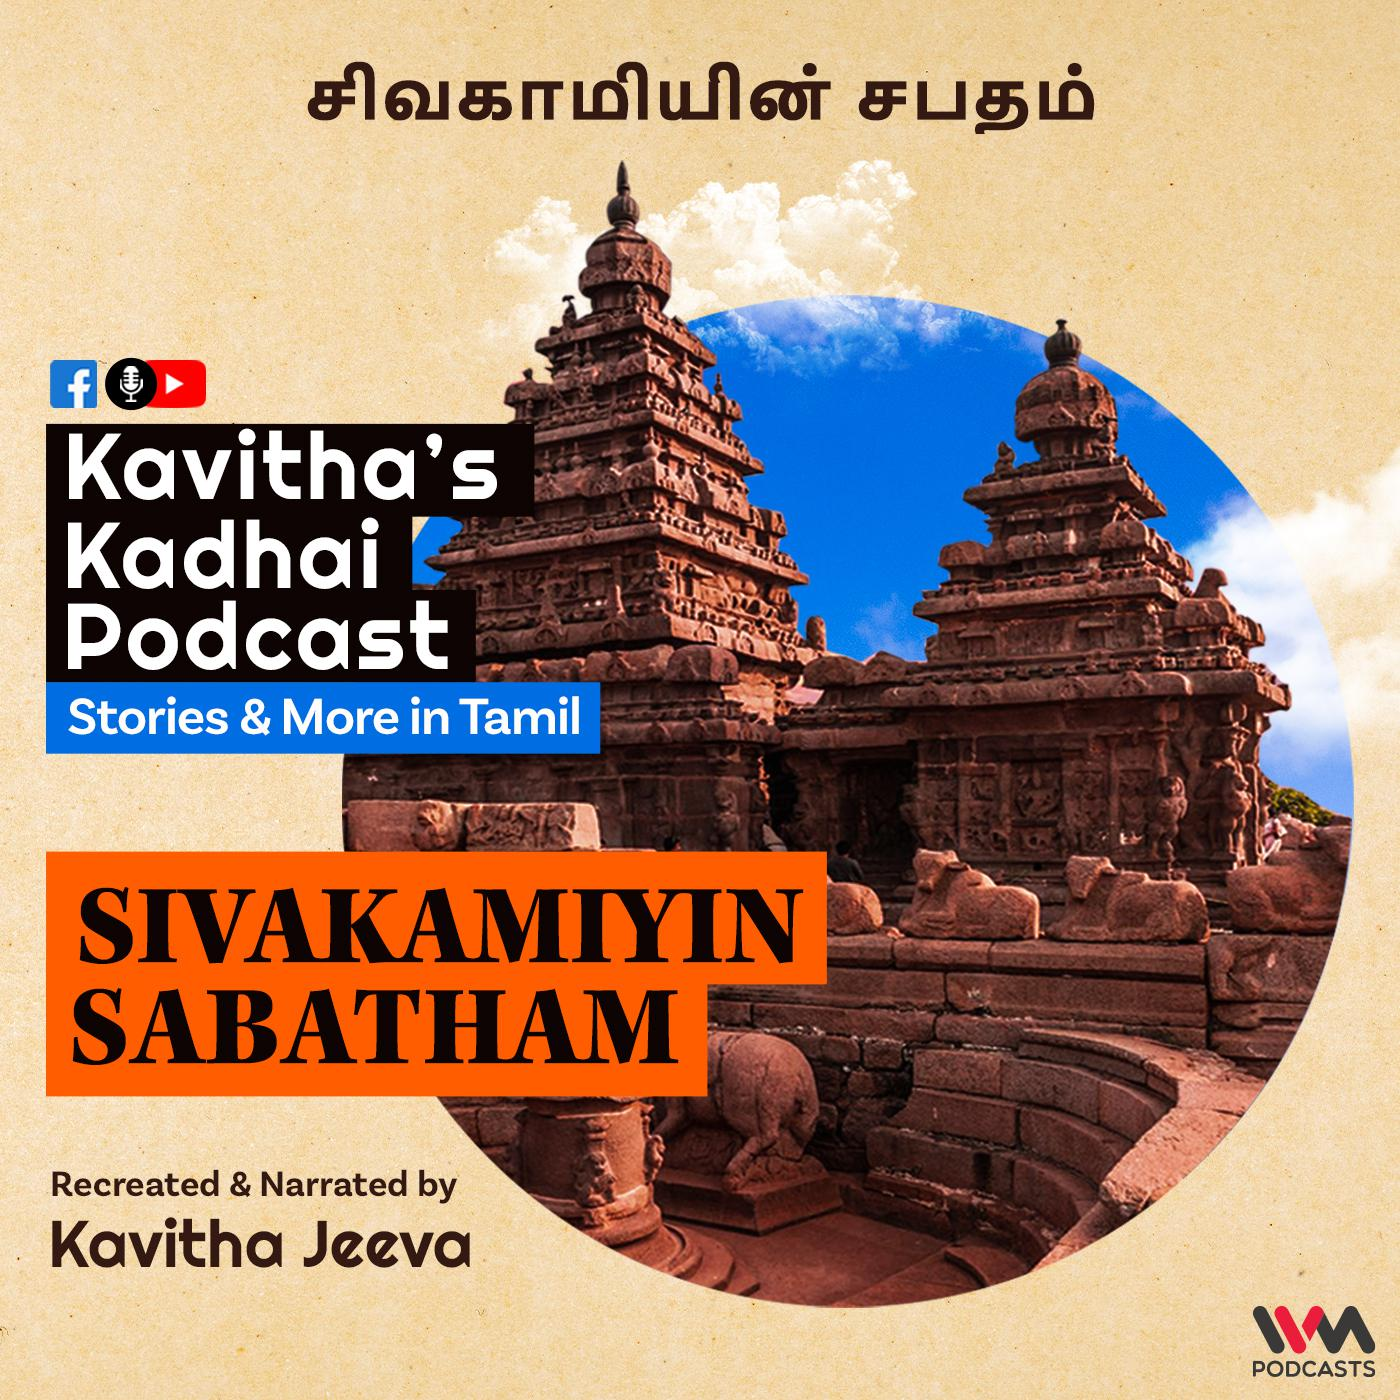 KadhaiPodcast’s Sivakamiyin Sabatham with Kavitha Jeeva - Episode #140